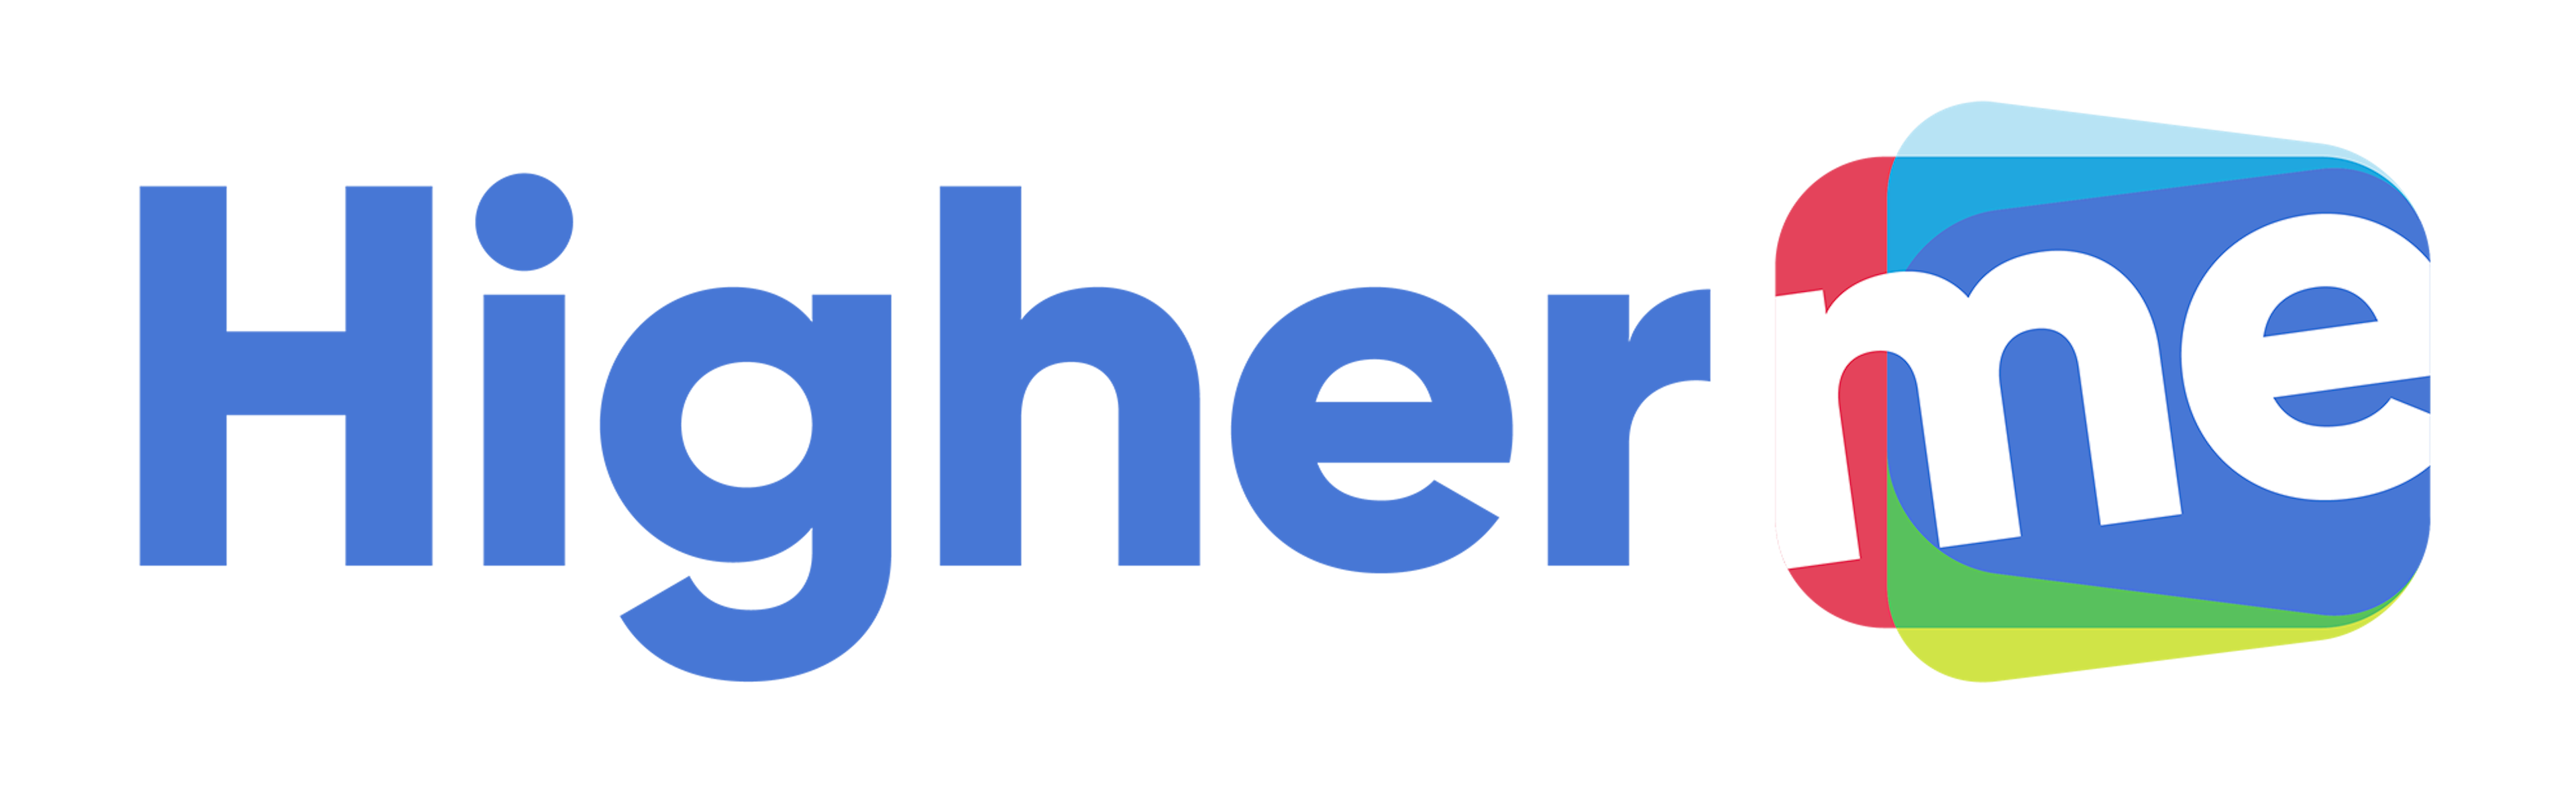 HigherMe Logo